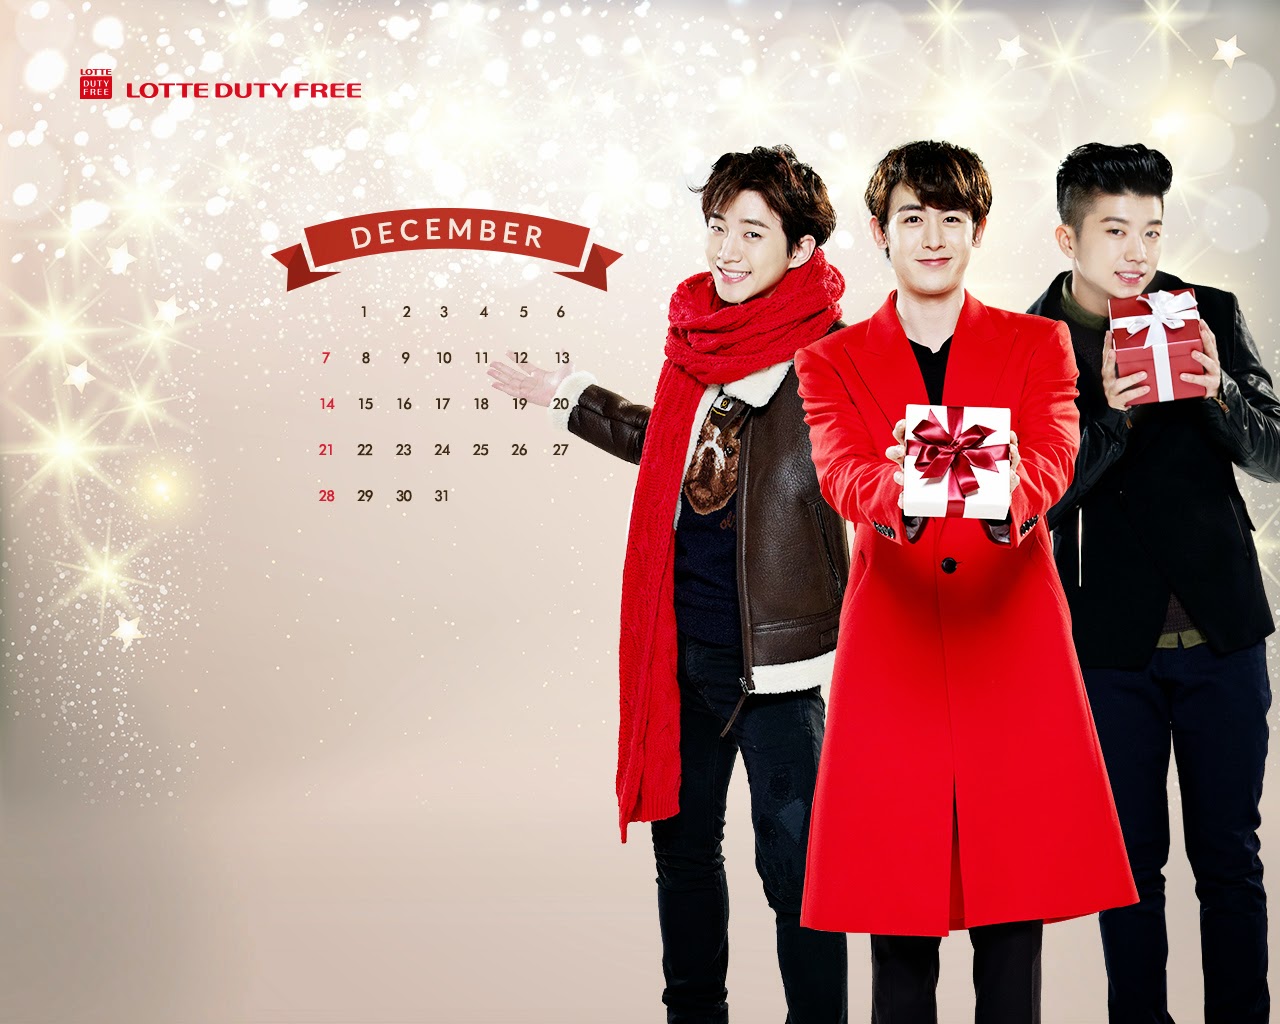 Exo 2pm Y Super Junior En Wallpaper Calendarios Diciembre